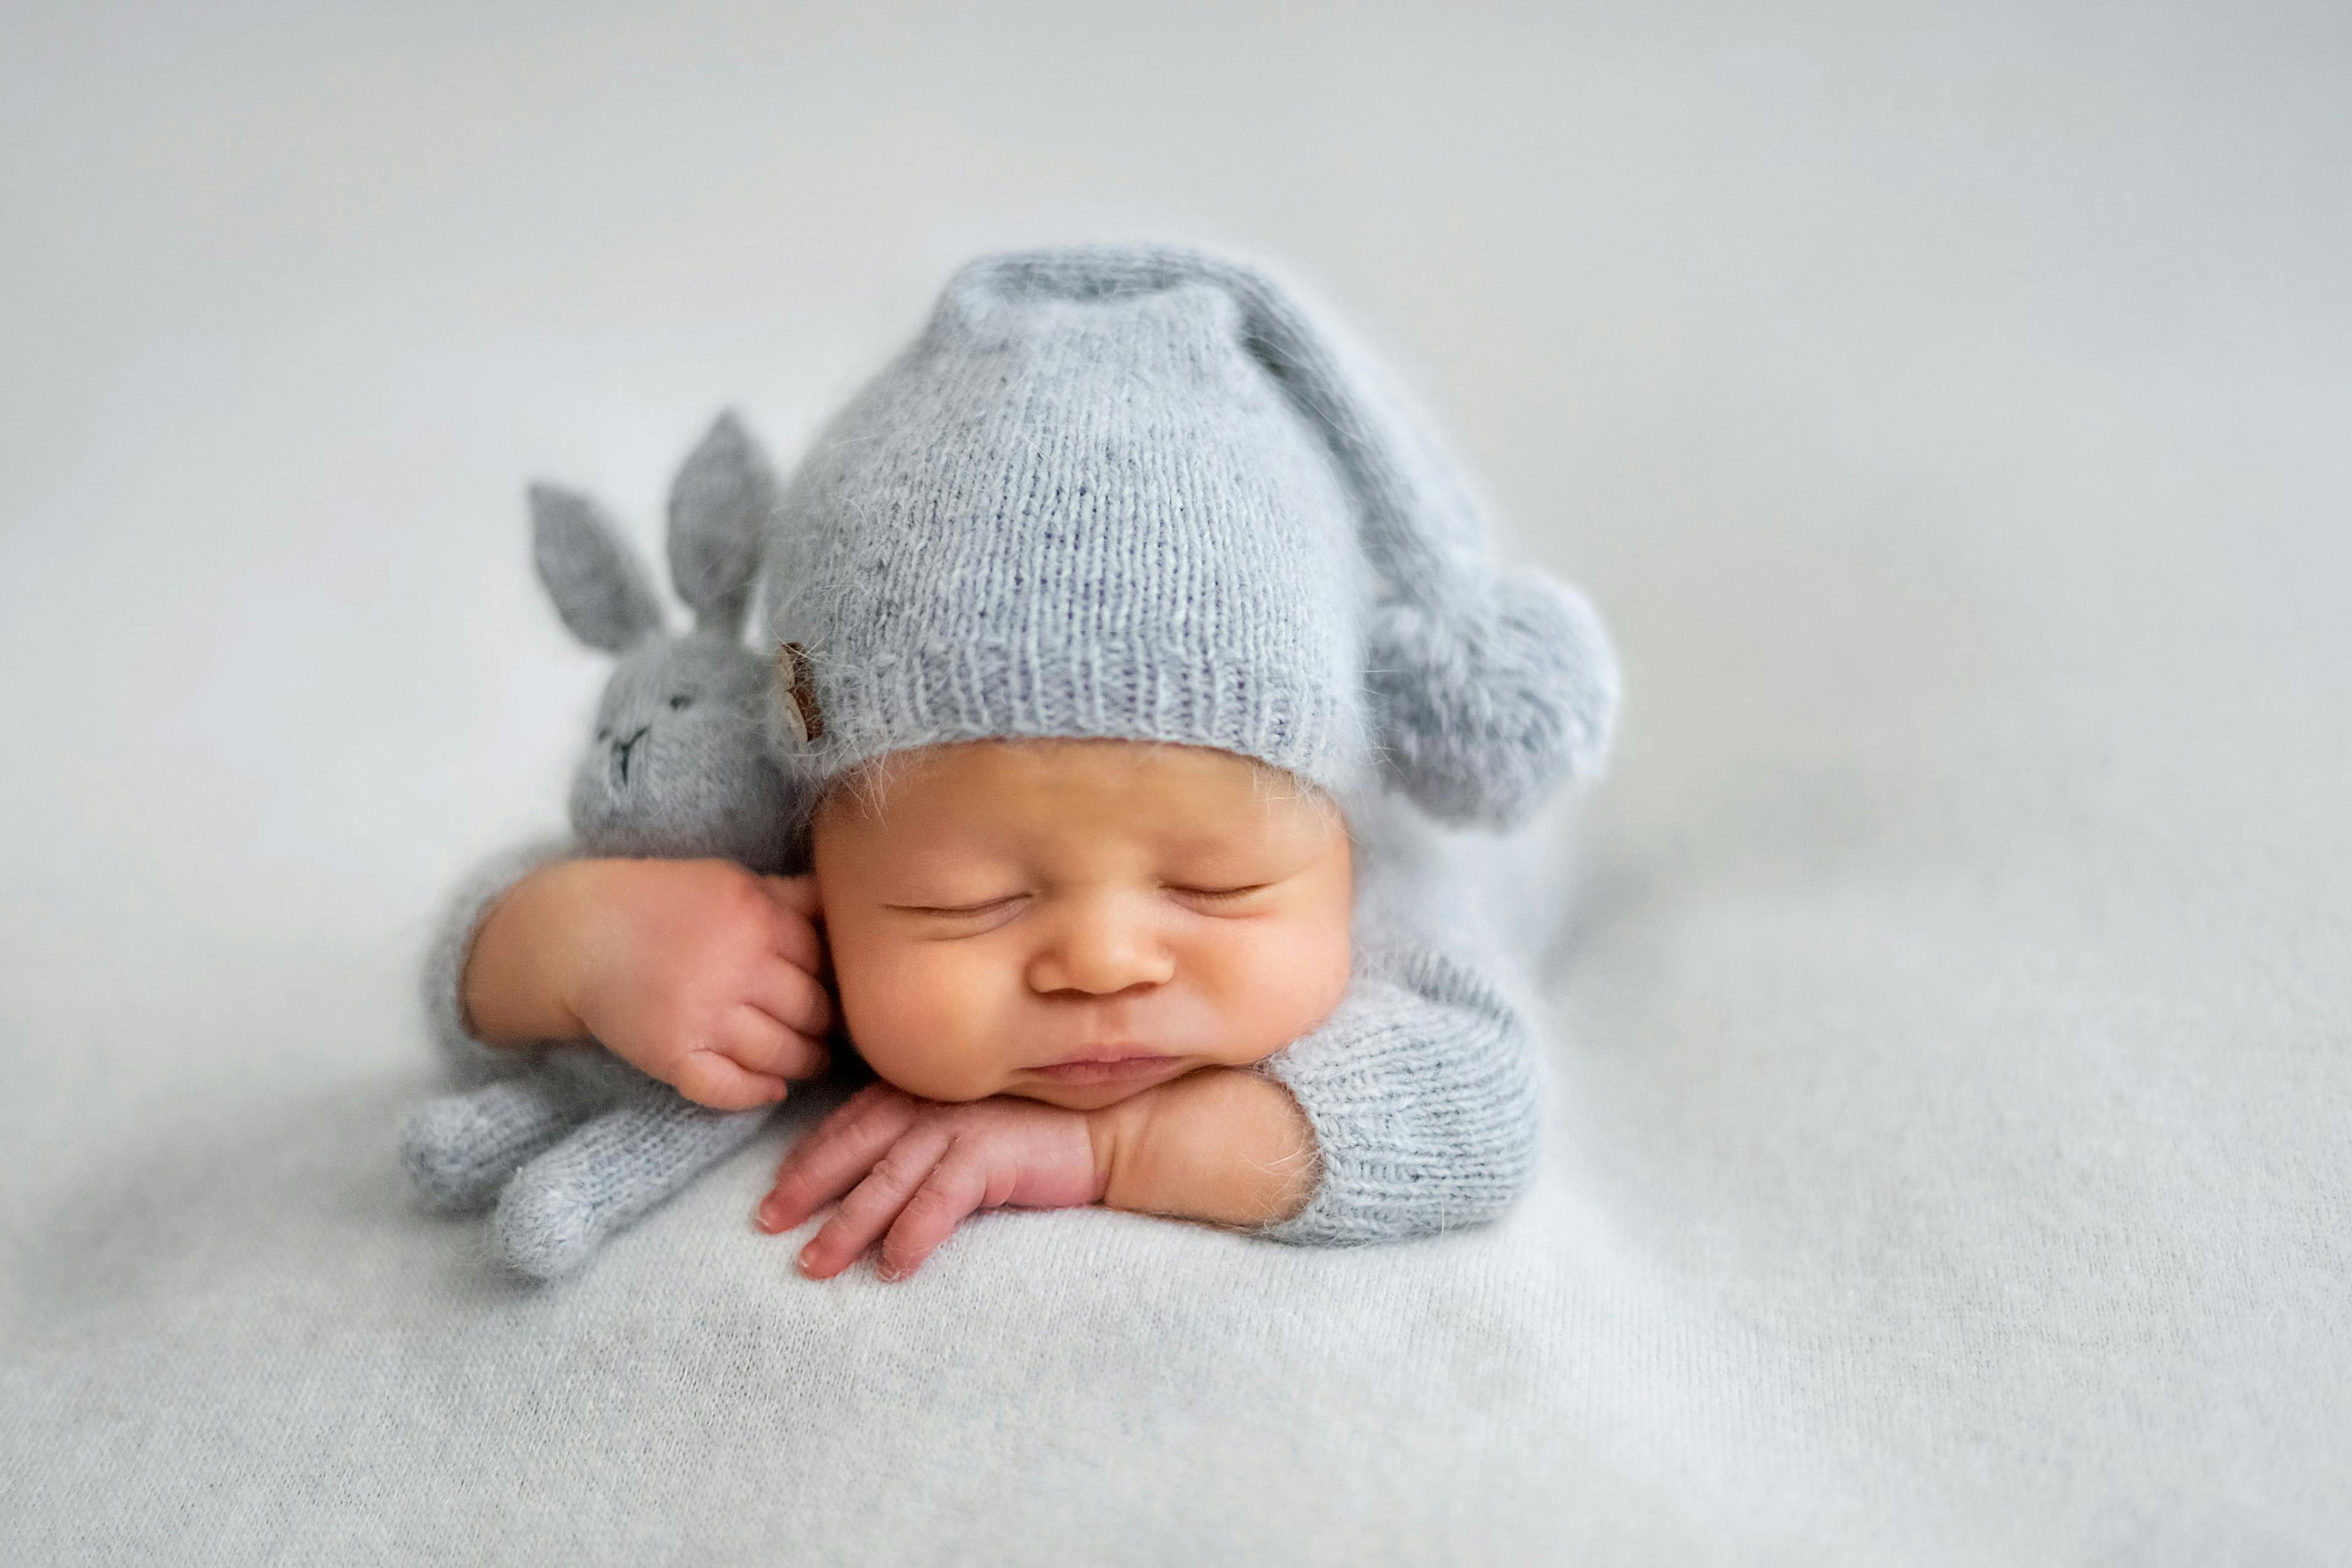 Sleeping newborn boy in the first days of life on white background: © Oksana-stock.adobe.com